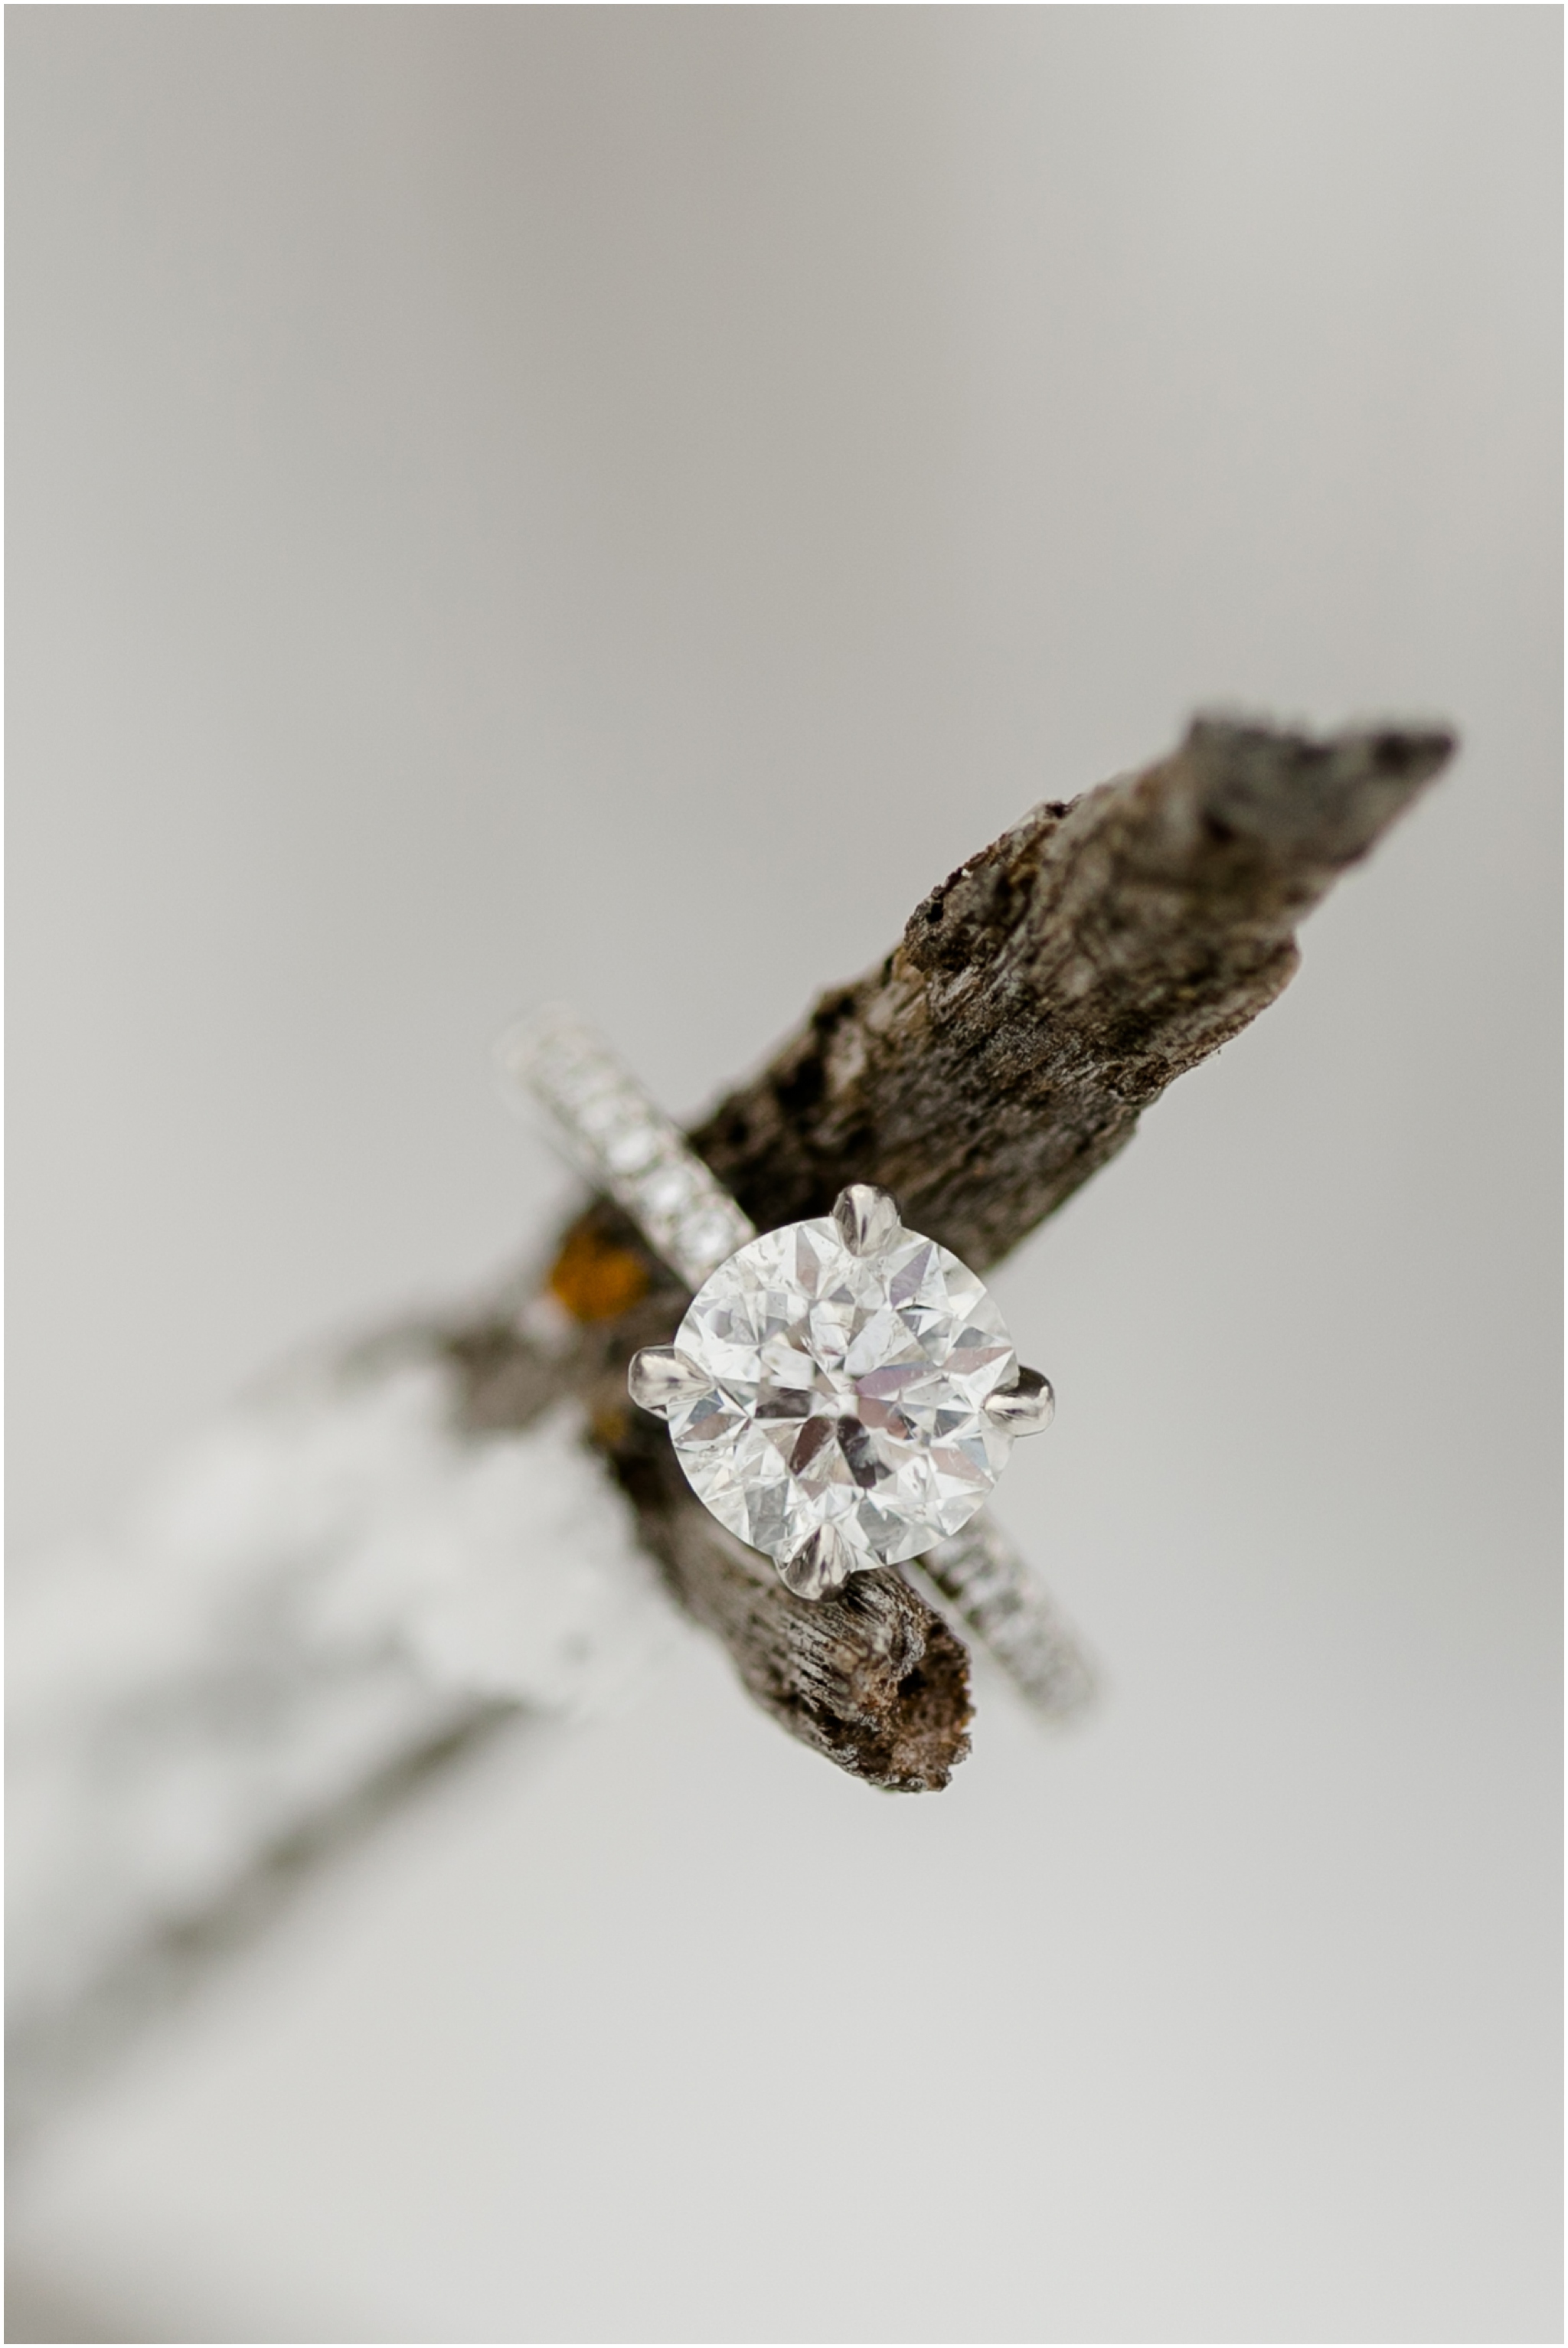 Winter Engagement Session, Detroit Lakes, Minnesota, Engagement Photography